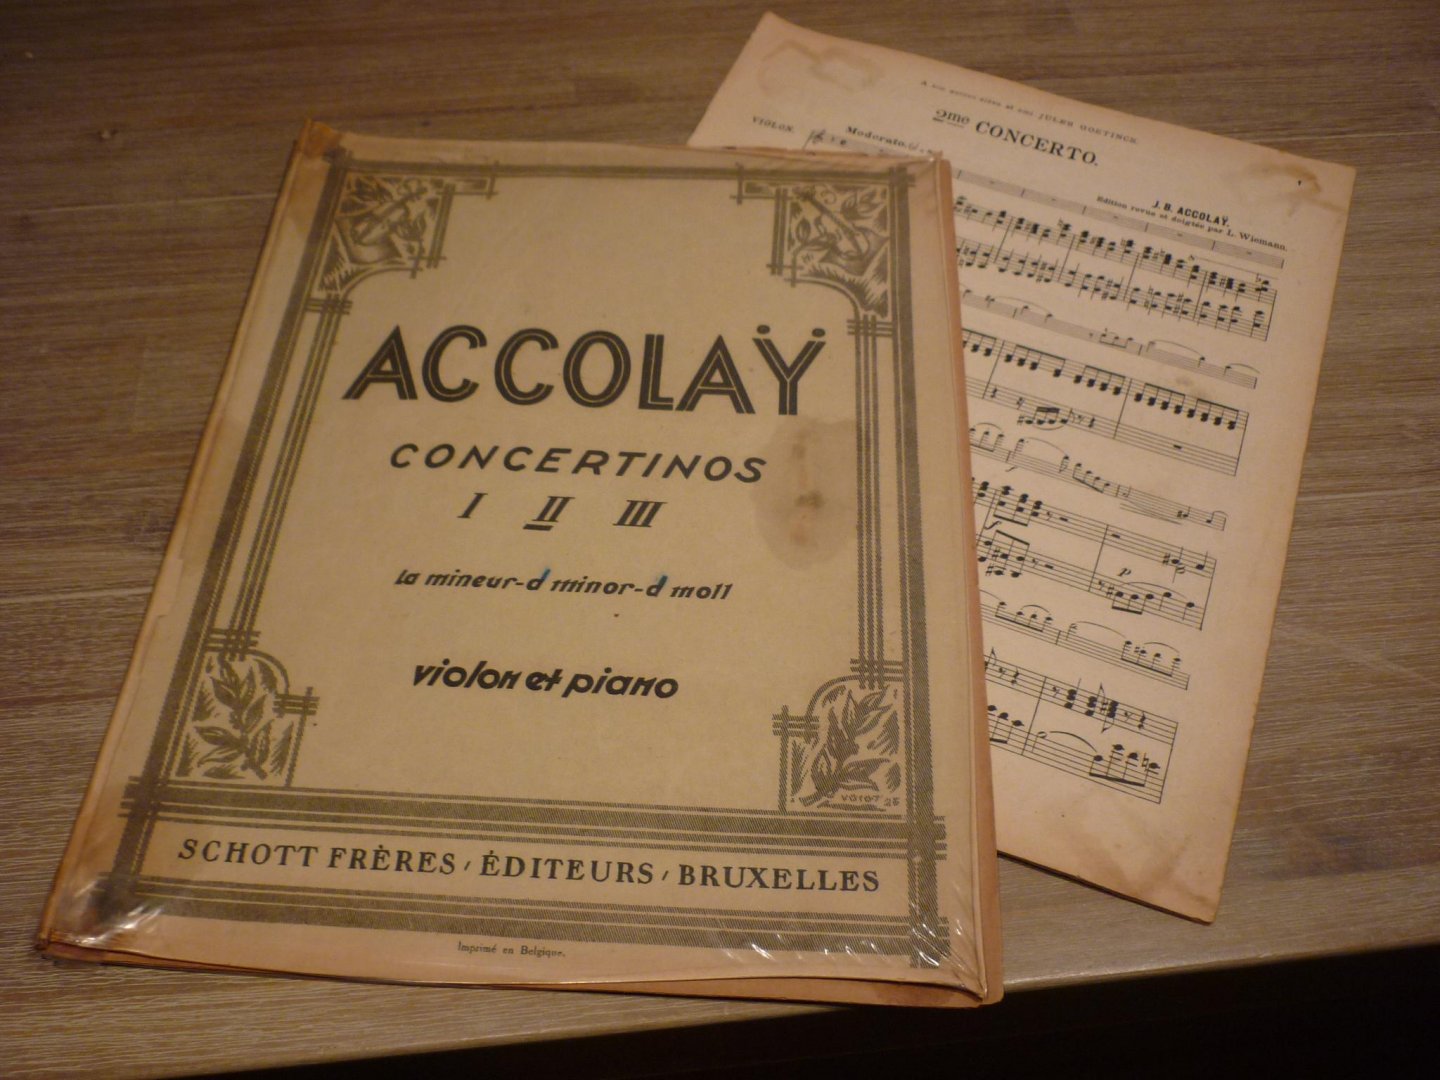 Accolay; Jean-Baptiste - Concertino Nr. 2 la mineur - d minor - d moll; voor: Viool, piano